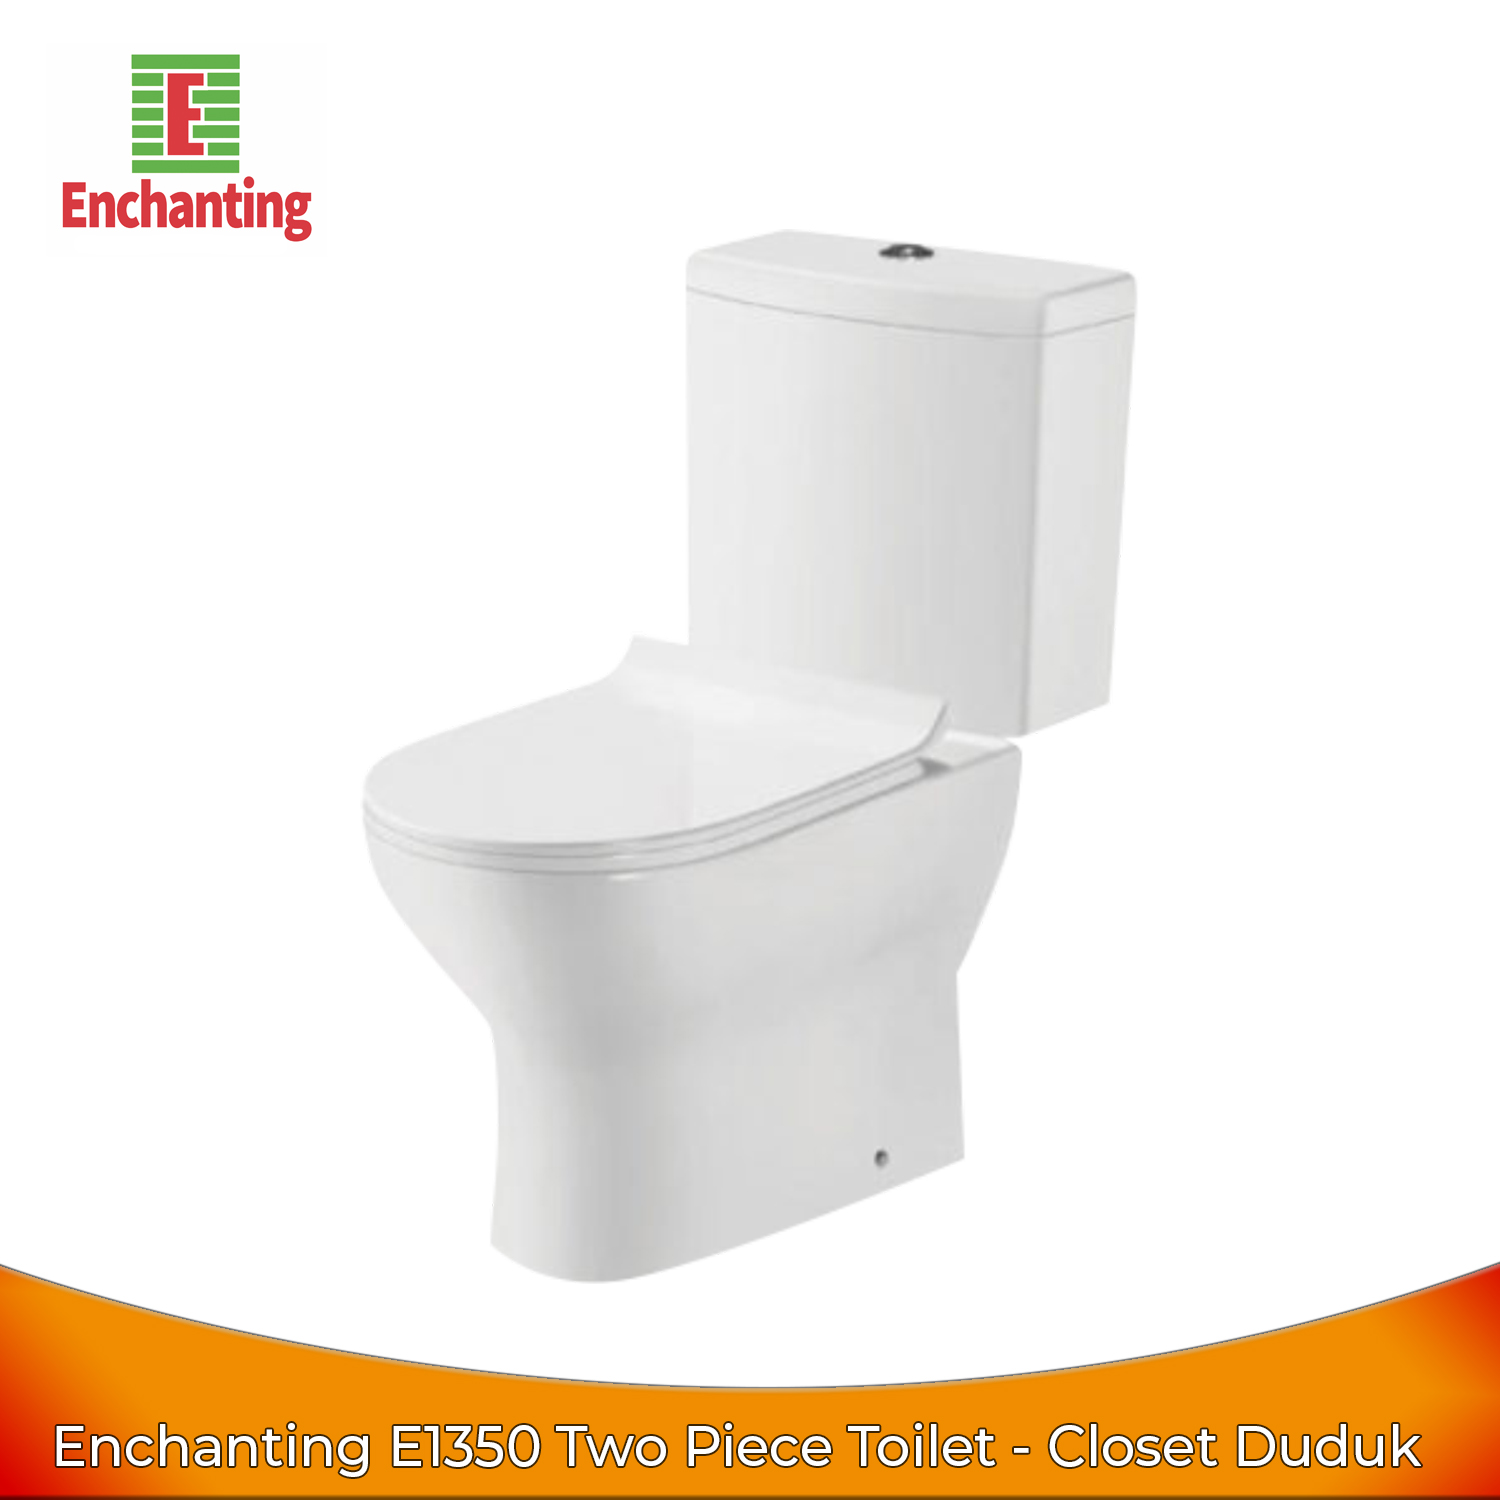 Enchanting E1350 Eco Washer Two Piece Toilet - Closet Duduk